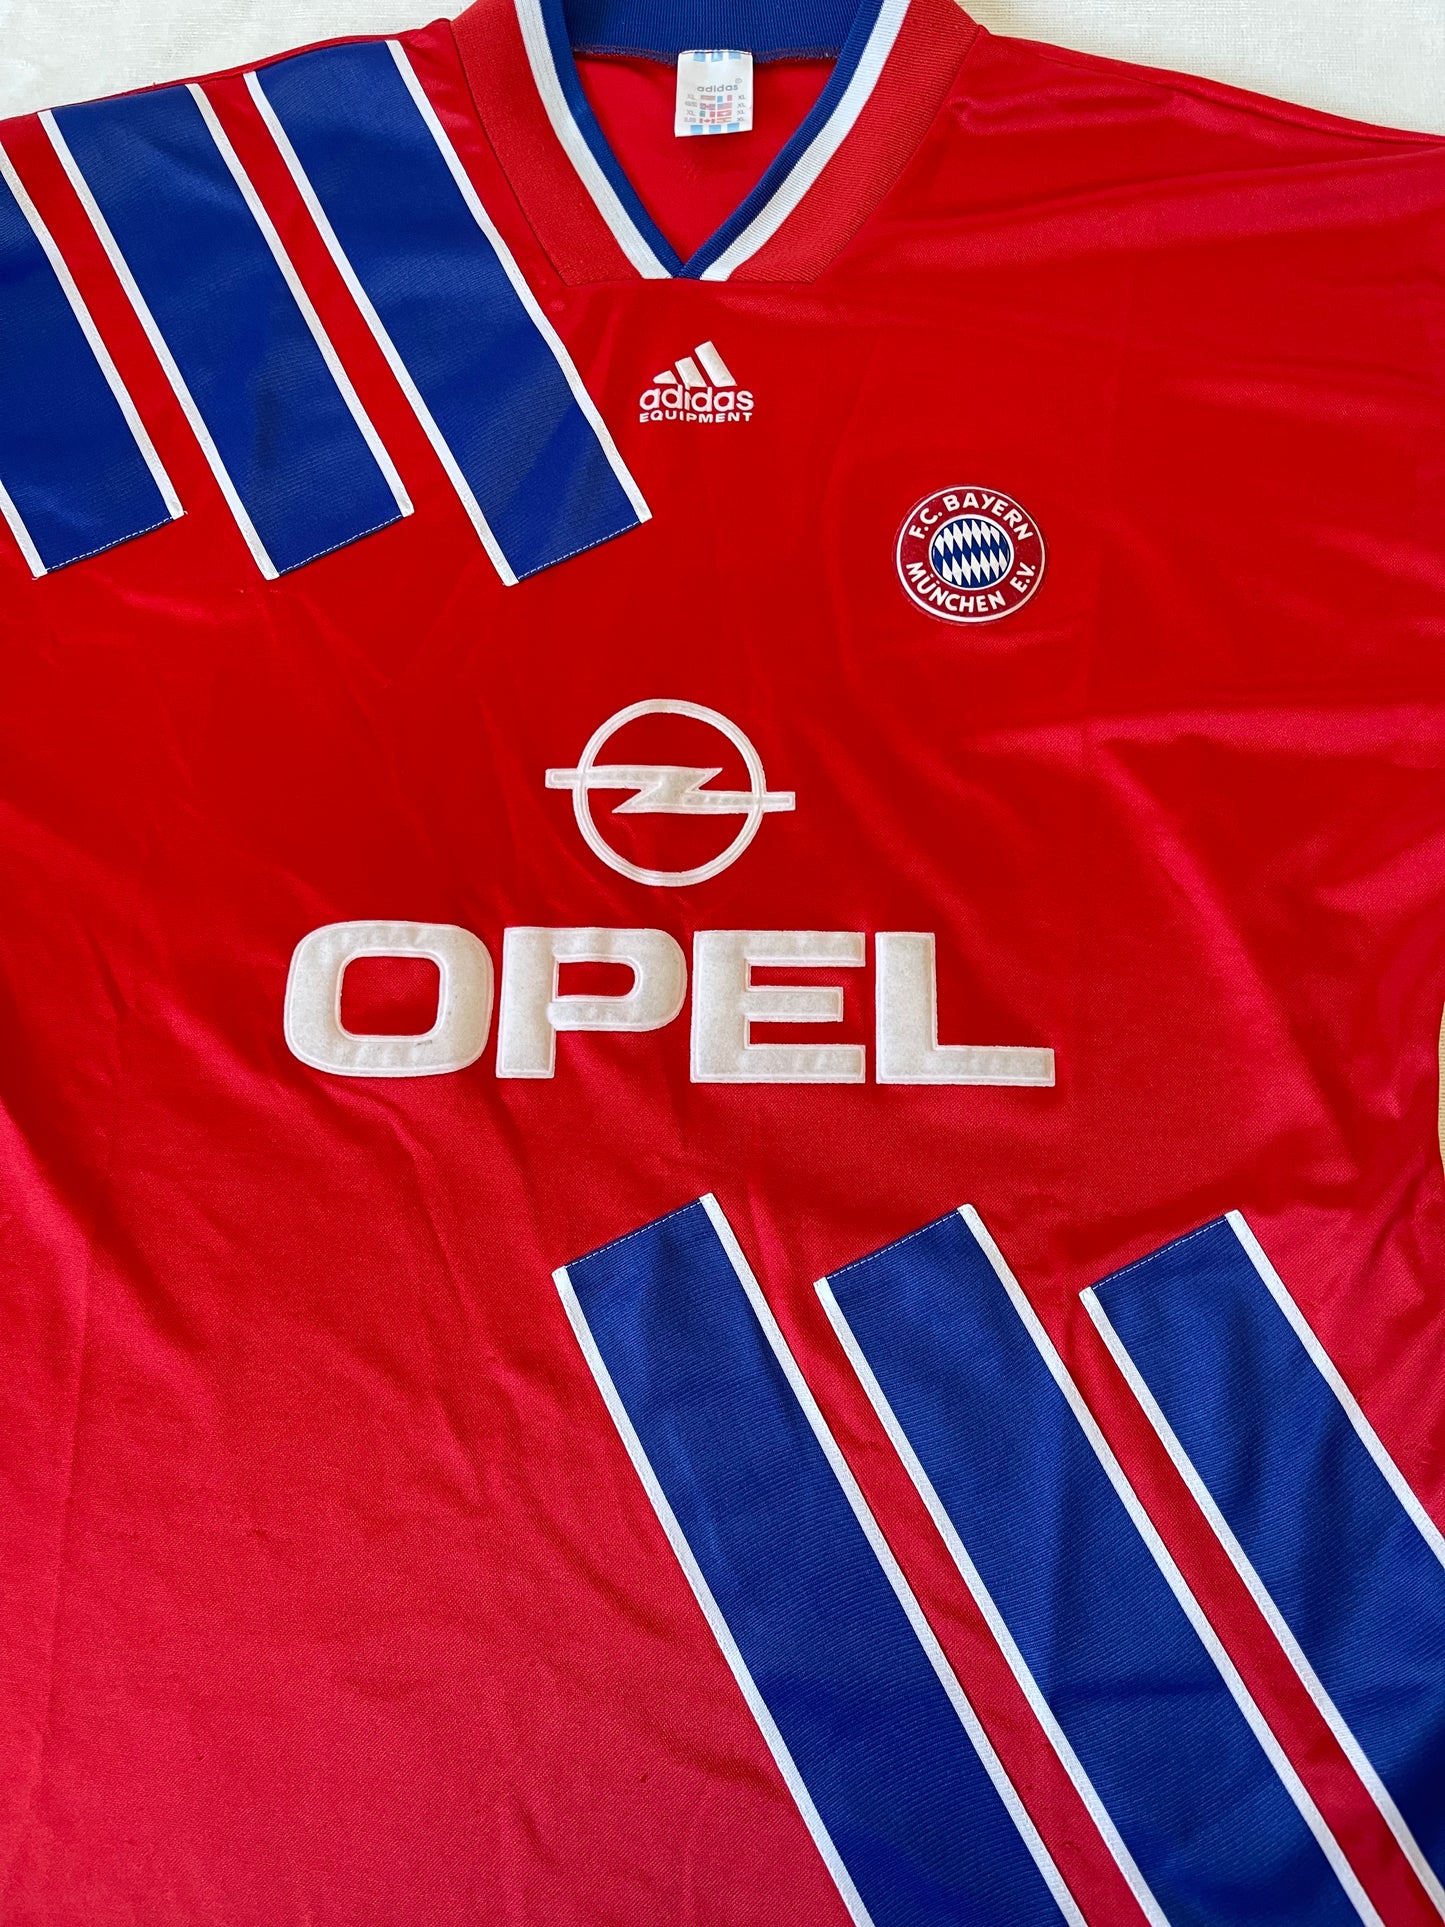 Vintage Adidas Equipment Bayern Munchen Munich 1993-1995 Football Shirt Home #5 Red Blue Opel Size XL Made in UK